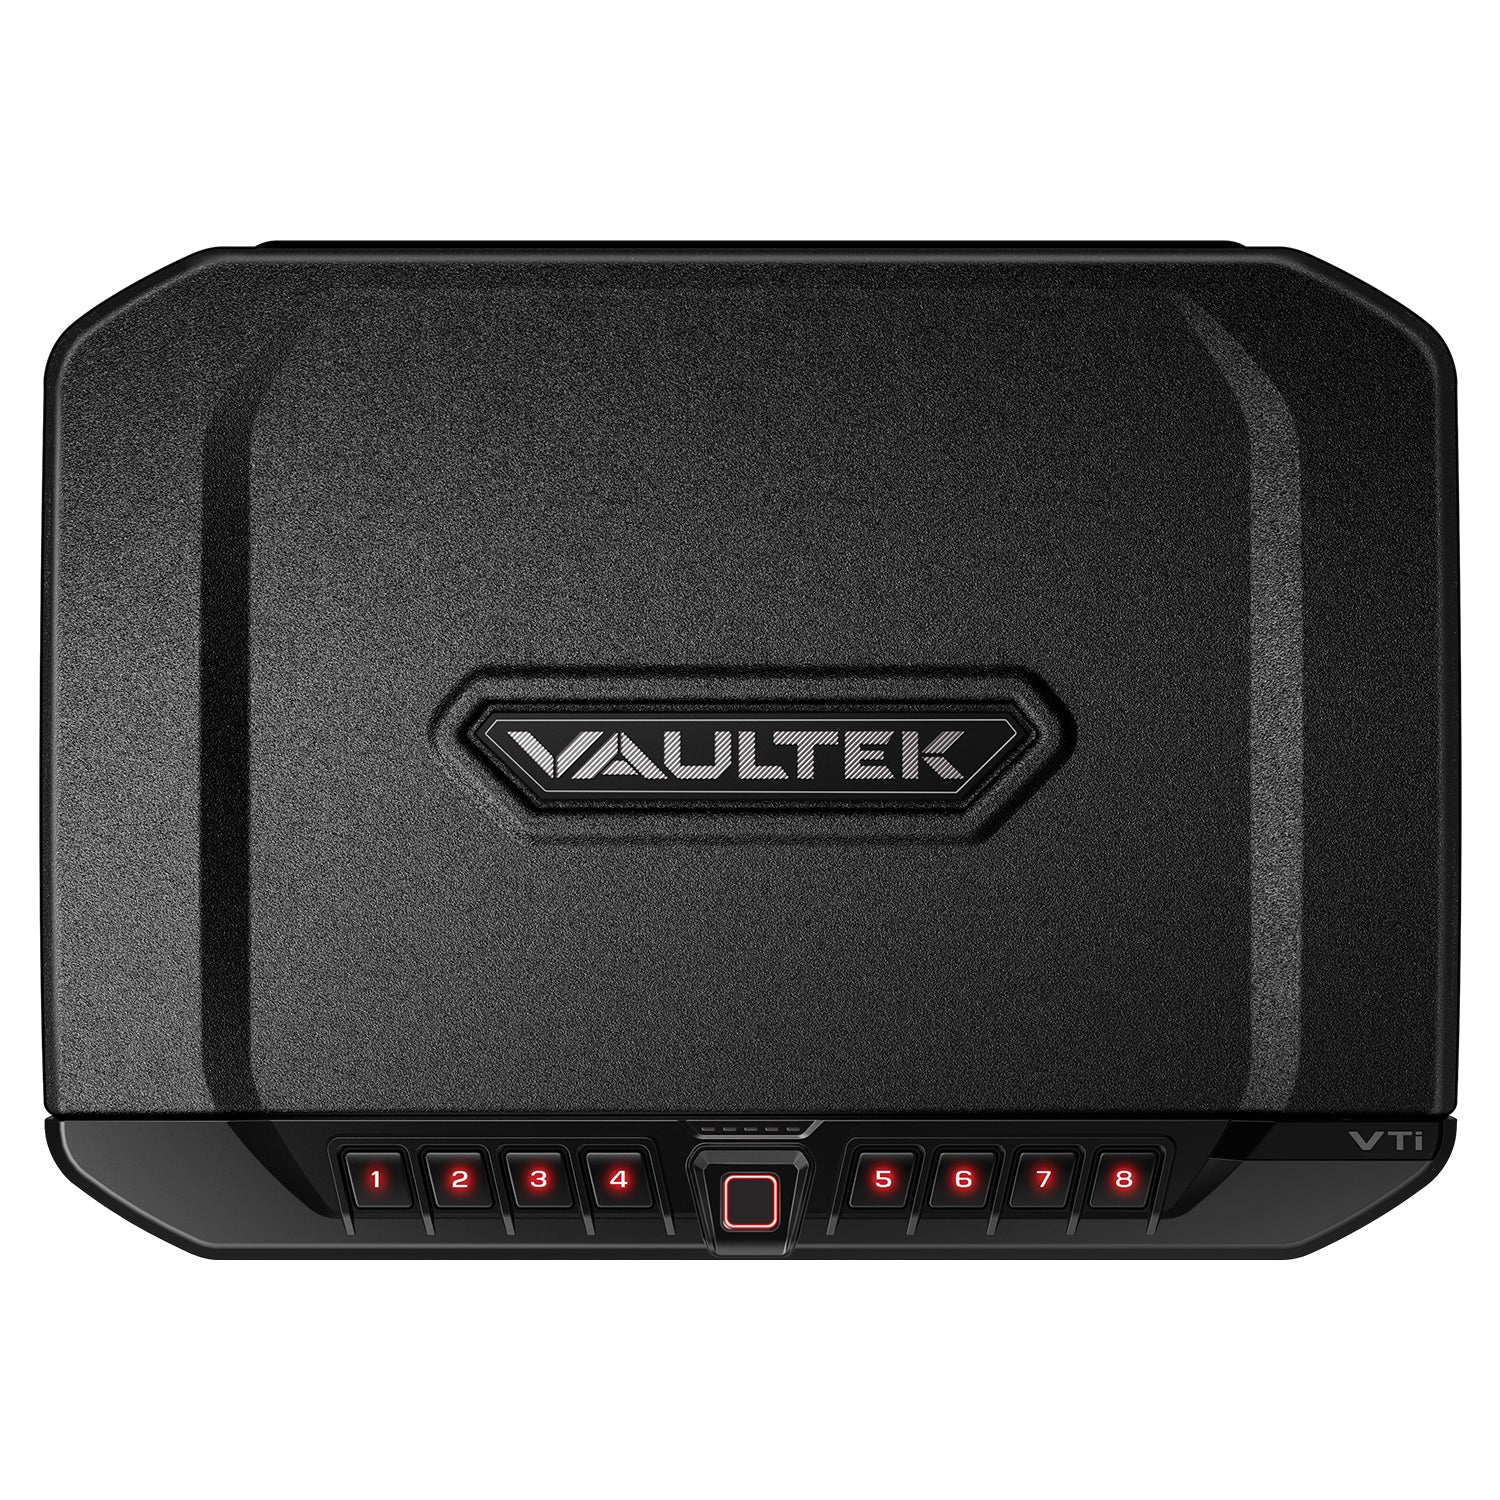 Vaultek vti full size rugged biometric and bluetooth smart safe - MODLOCK